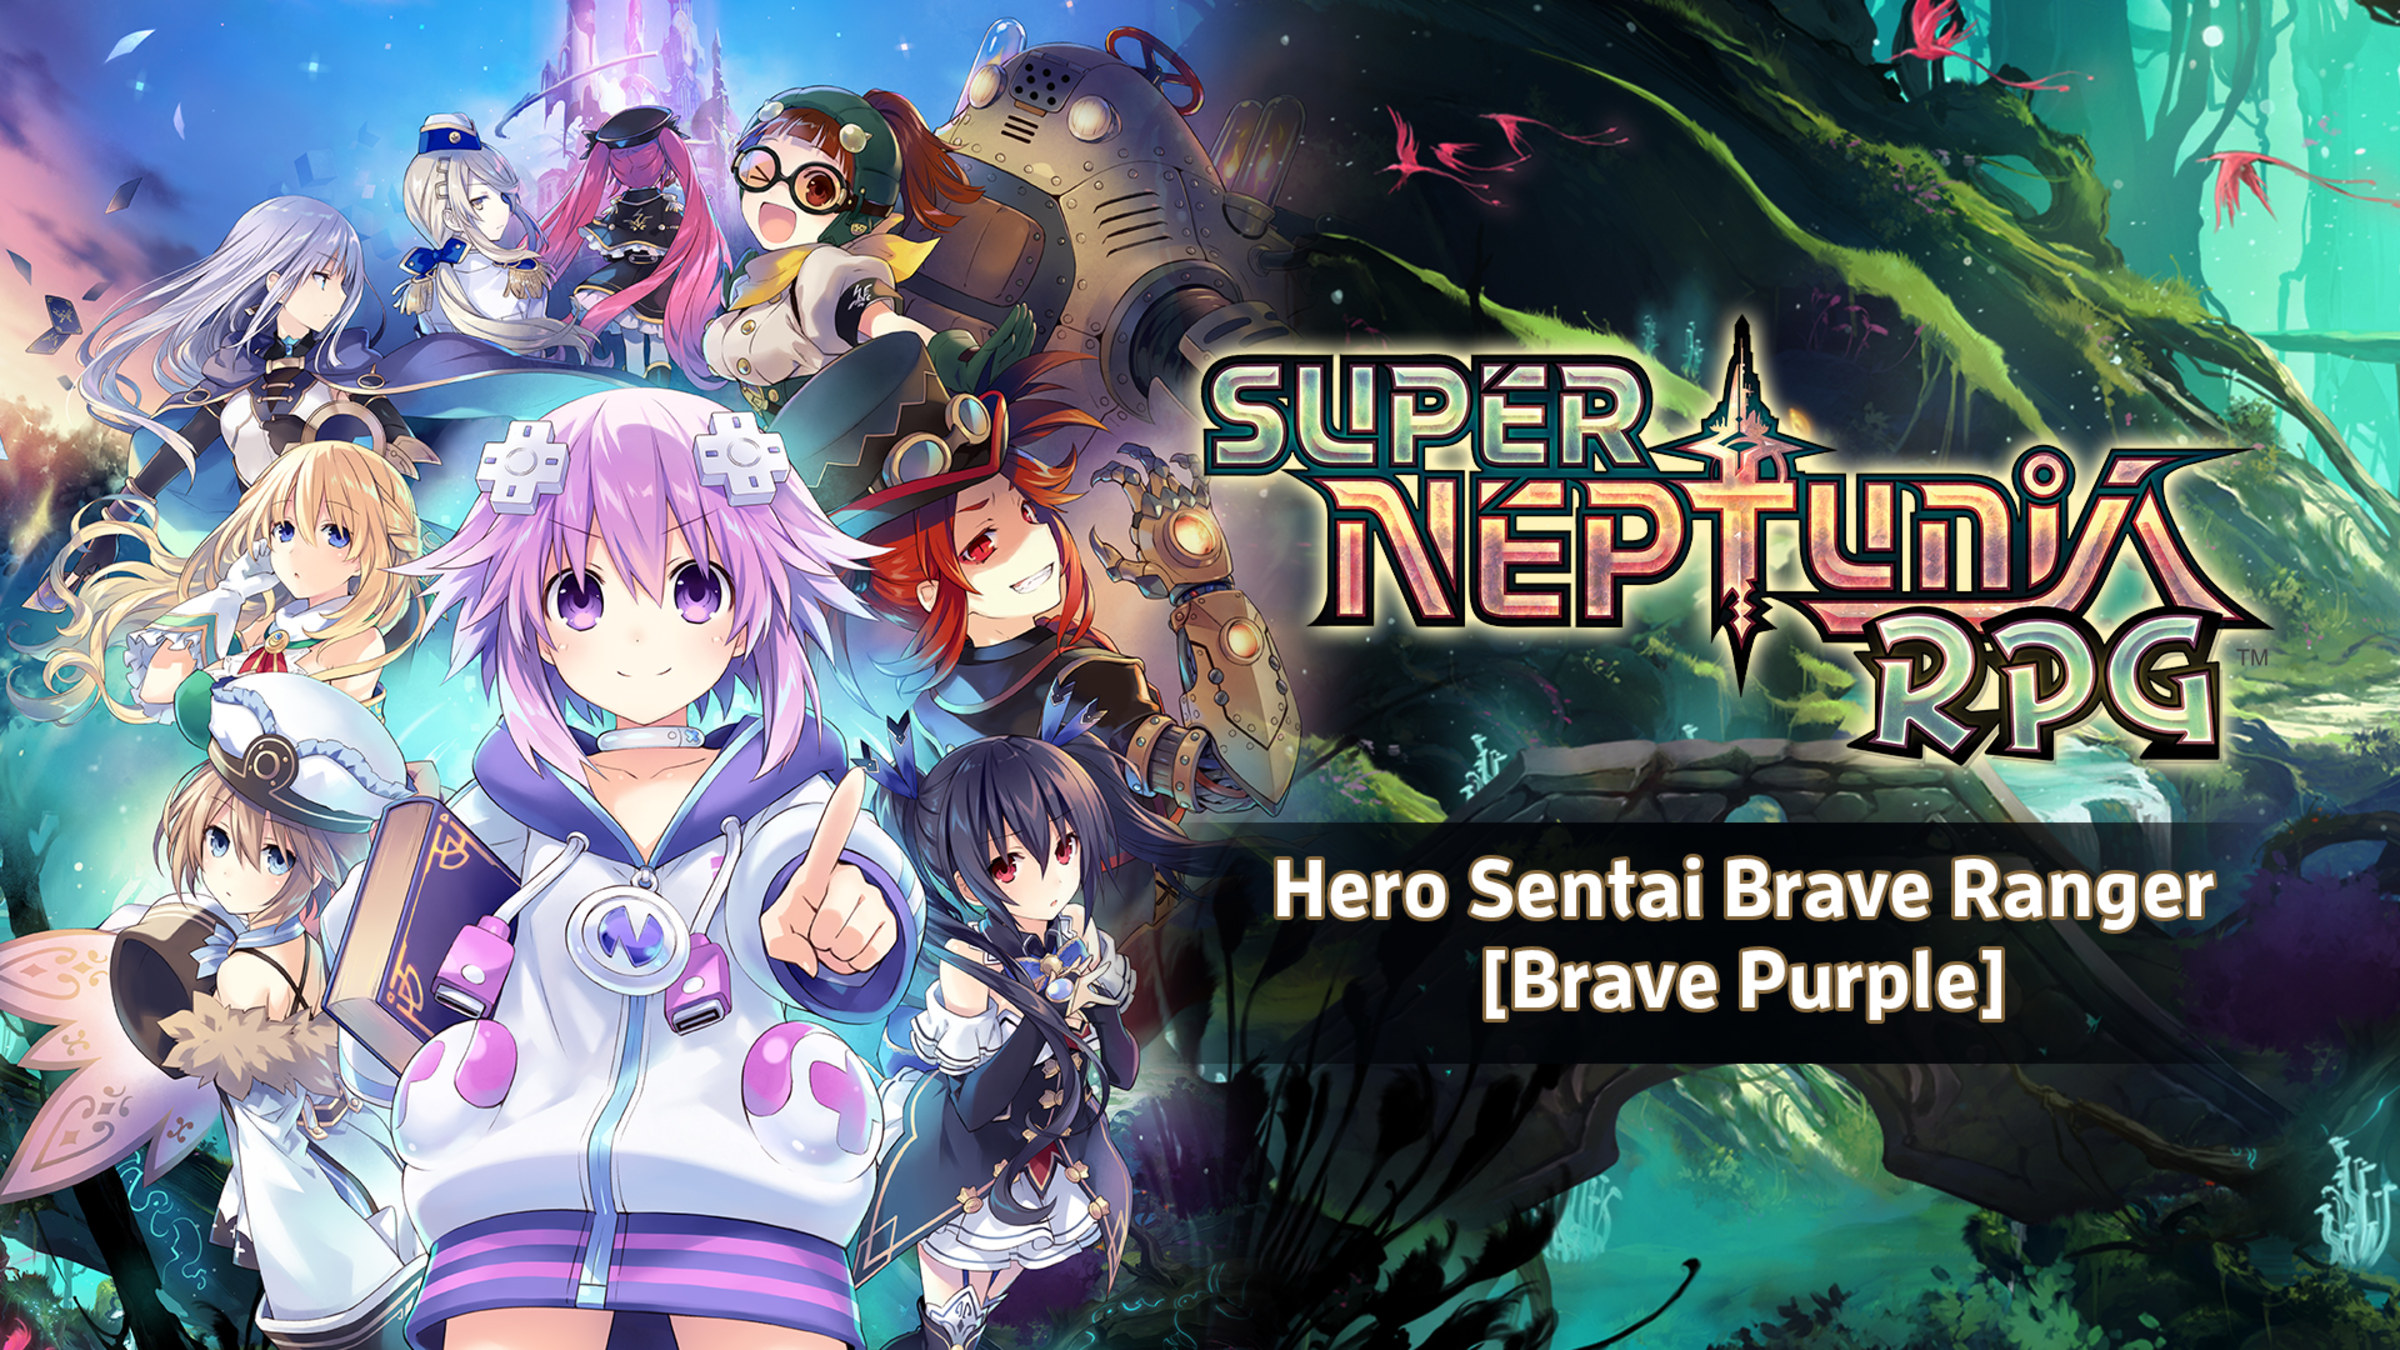 Sinewi overdrive Udpakning Hero Sentai Brave Ranger [Brave Purple] for Nintendo Switch - Nintendo  Official Site